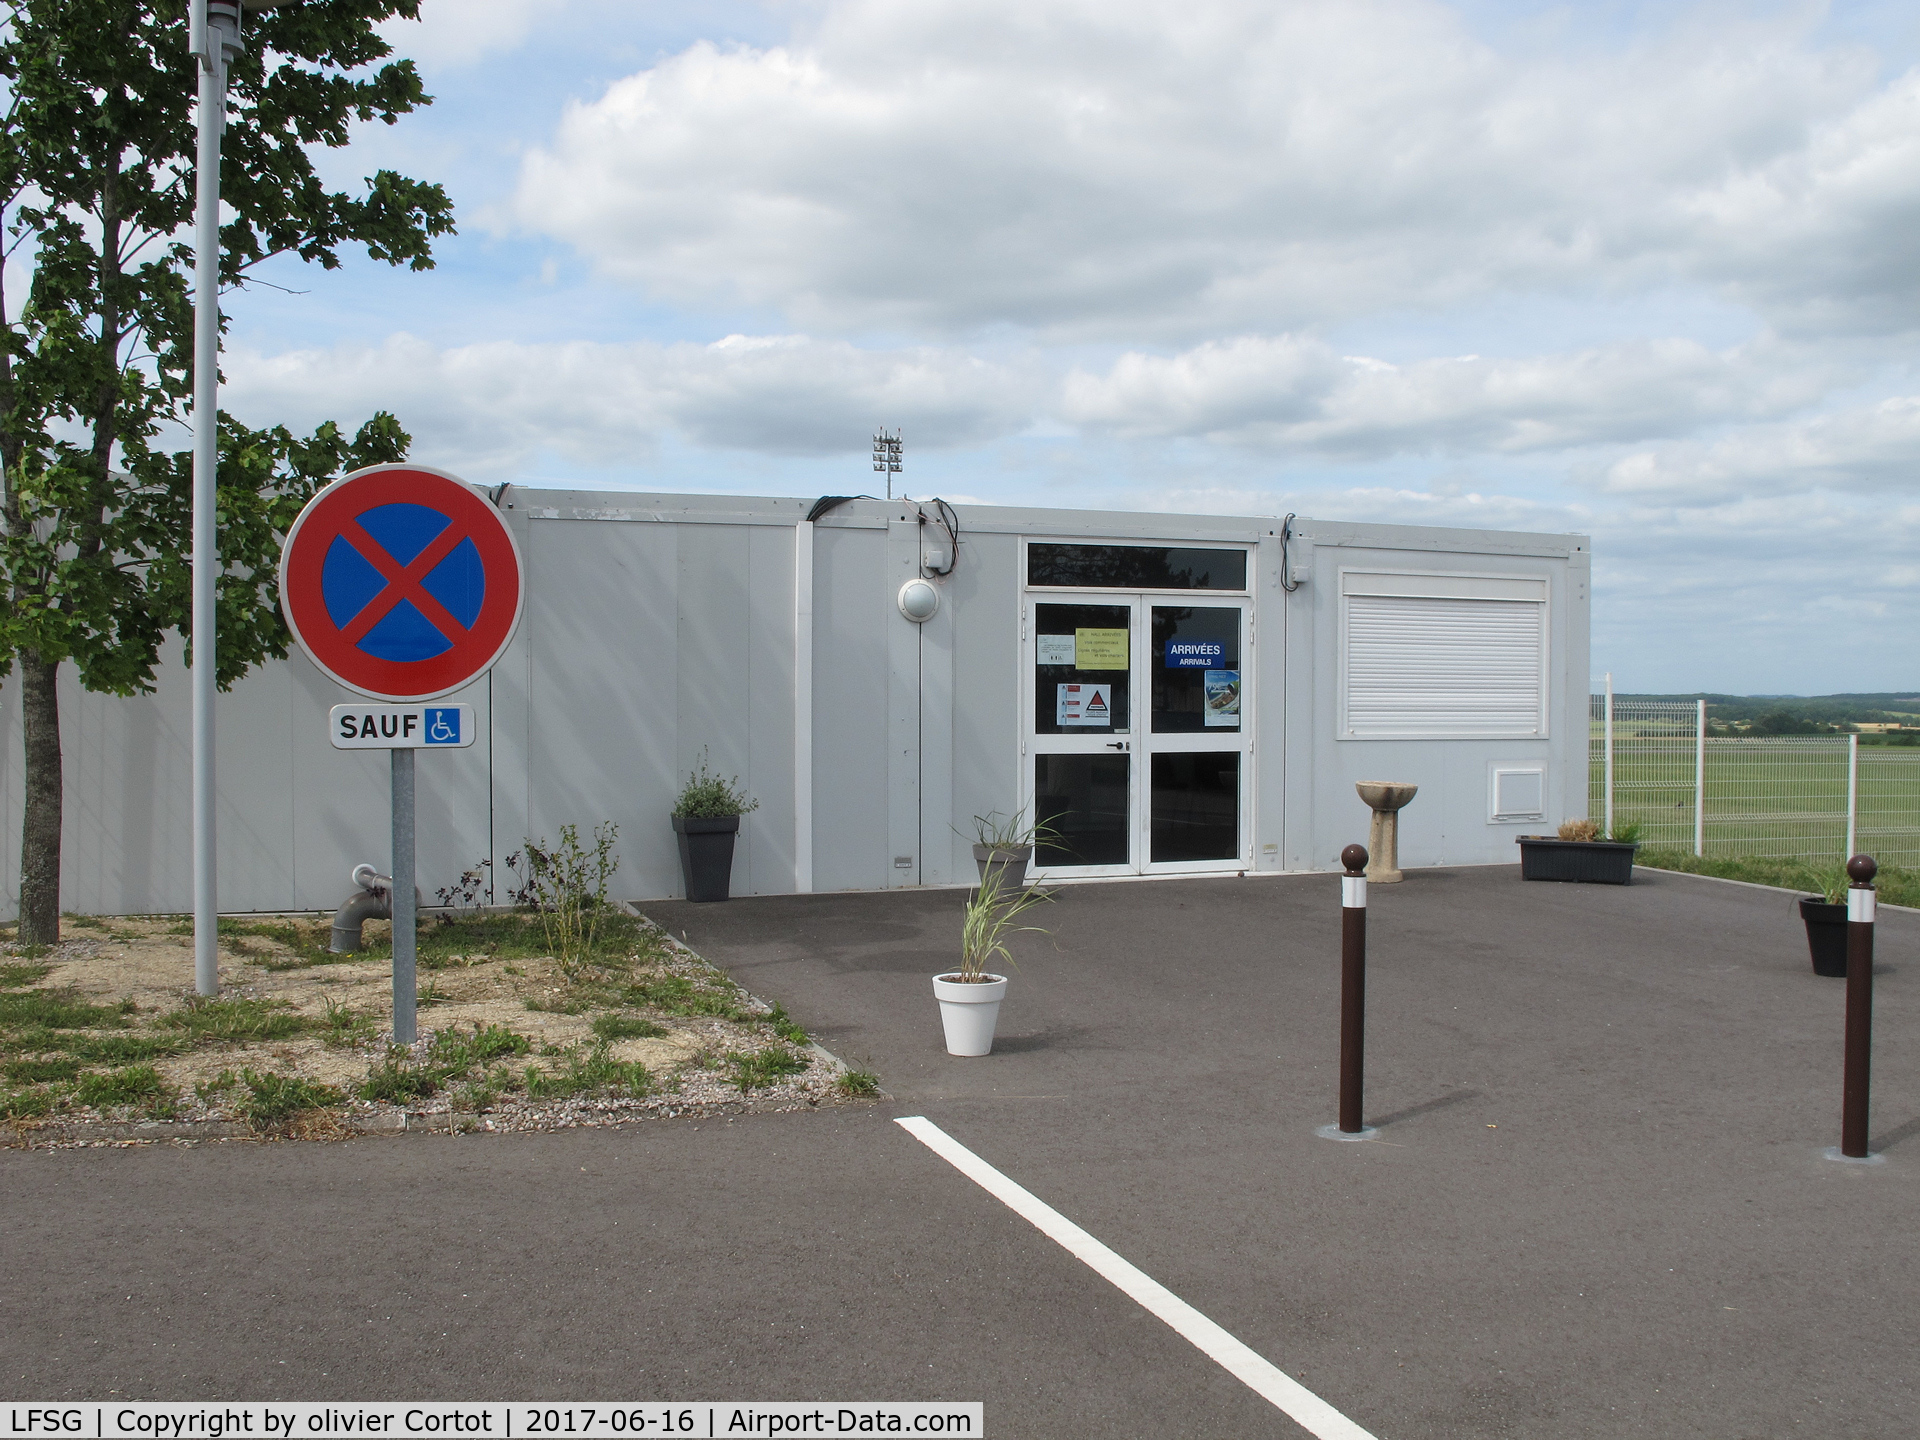 Épinal Mirecourt Airport, Épinal France (LFSG) - the arrivals terminal !